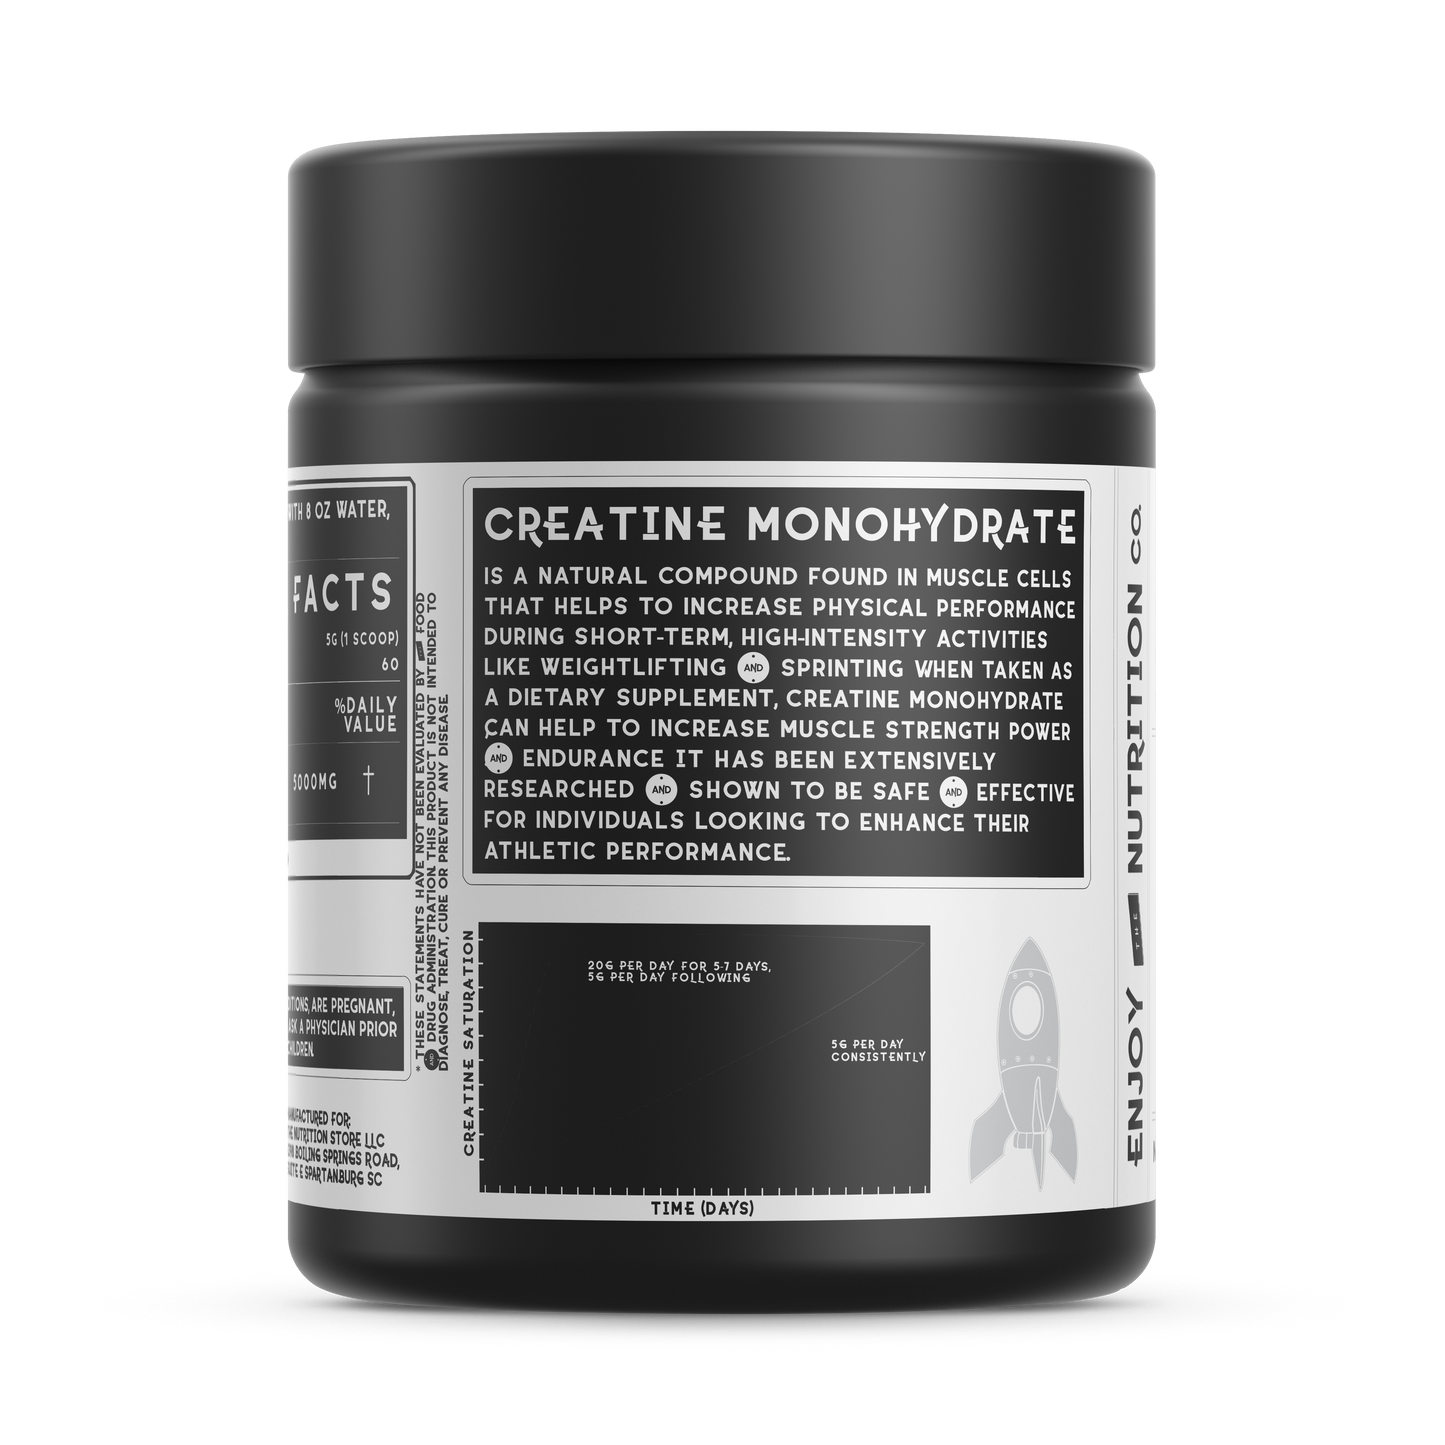 Enjoy The Creatine (Creatine Monohydrate 60 Servings)